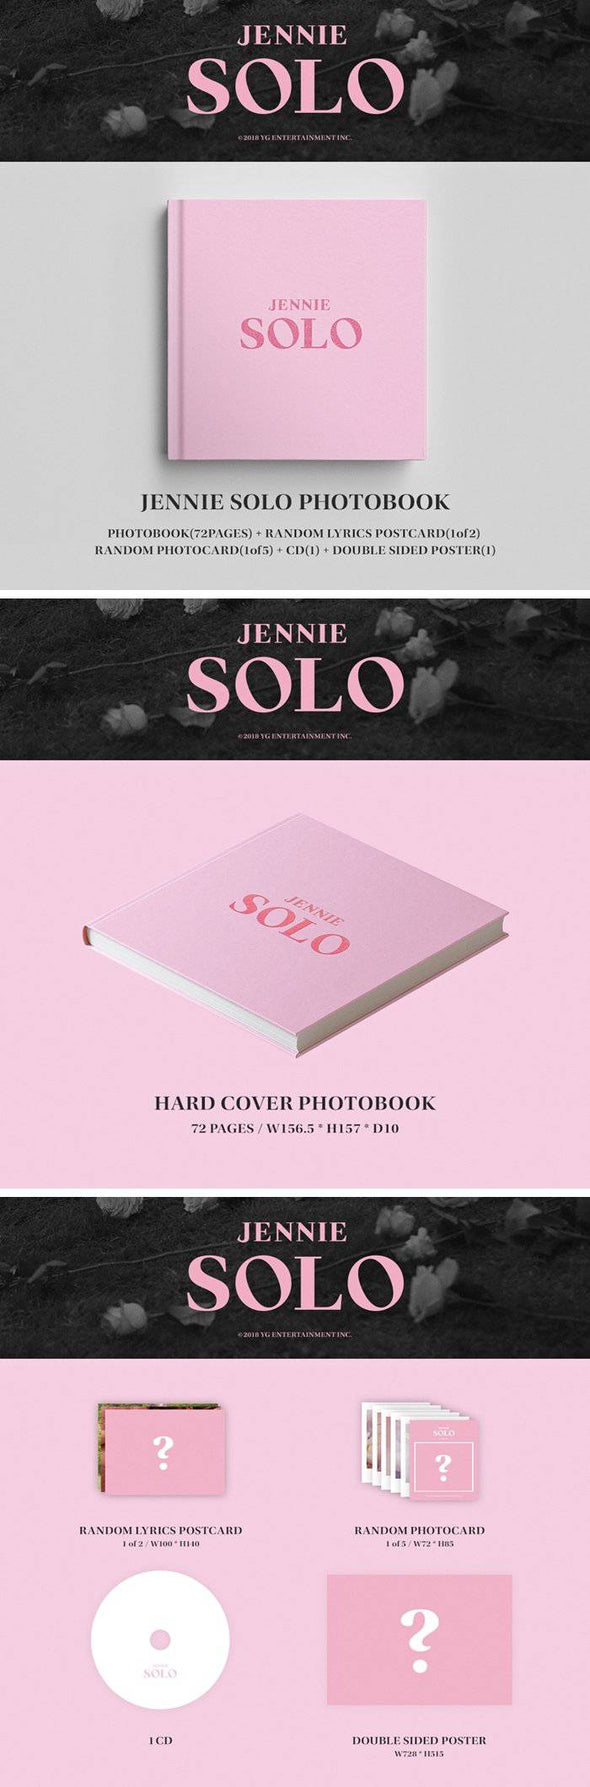 [BLACKPINK] JENNIE SOLO - 1st Single album - Kpop Music 사랑해요